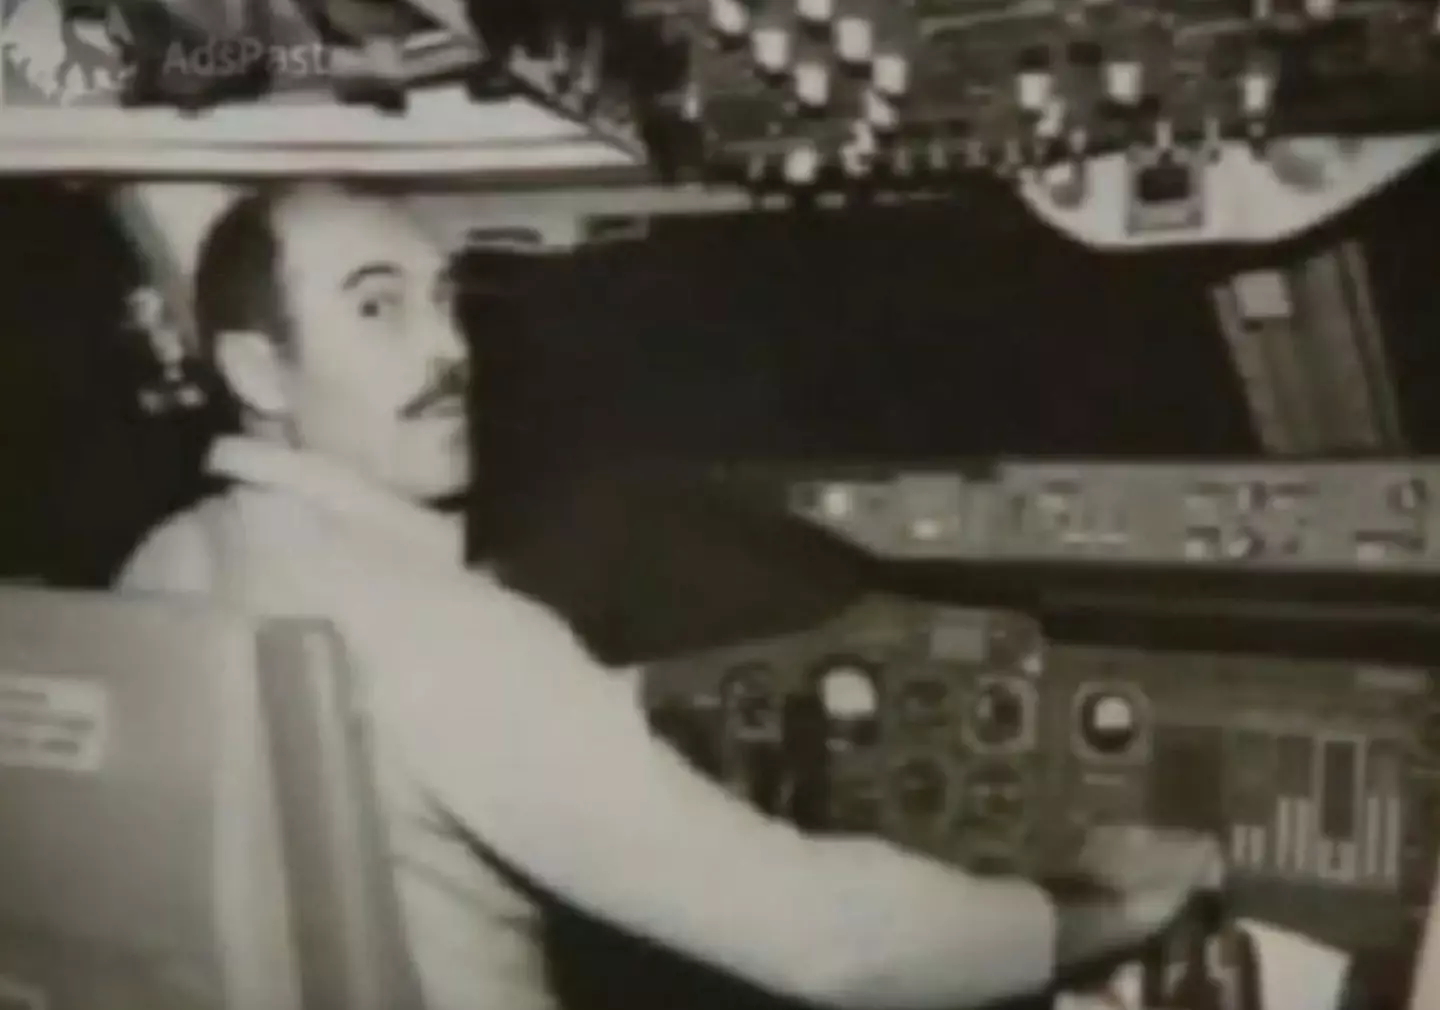 Pilot Sifis Migadis had over 30 years of experience (YouTube/Mini Air Crash Investigation)